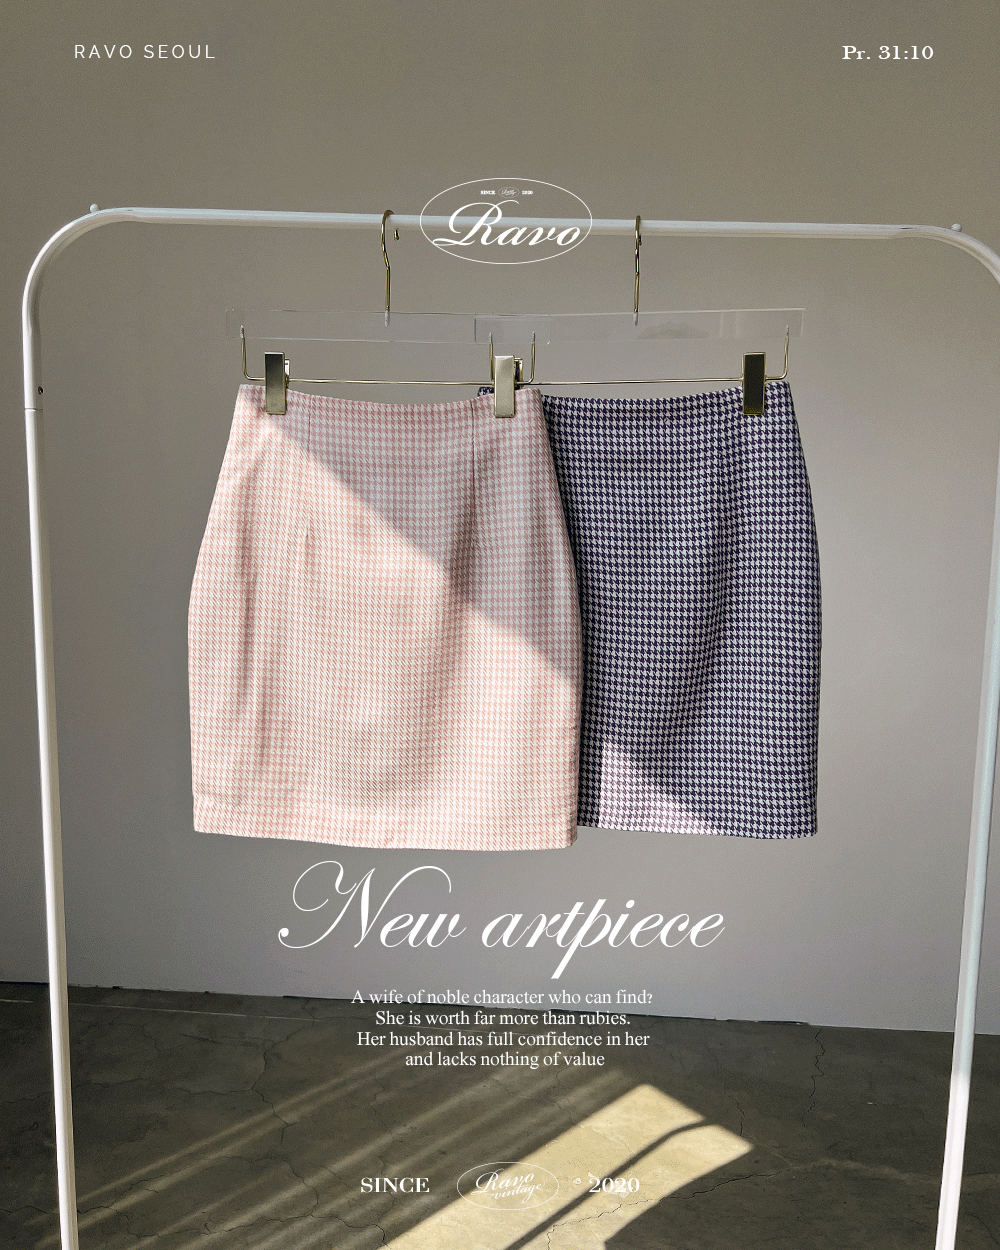 Ra Skirt 라스커트 - Perez 페레스 47cm mini Skirt 미니 스커트